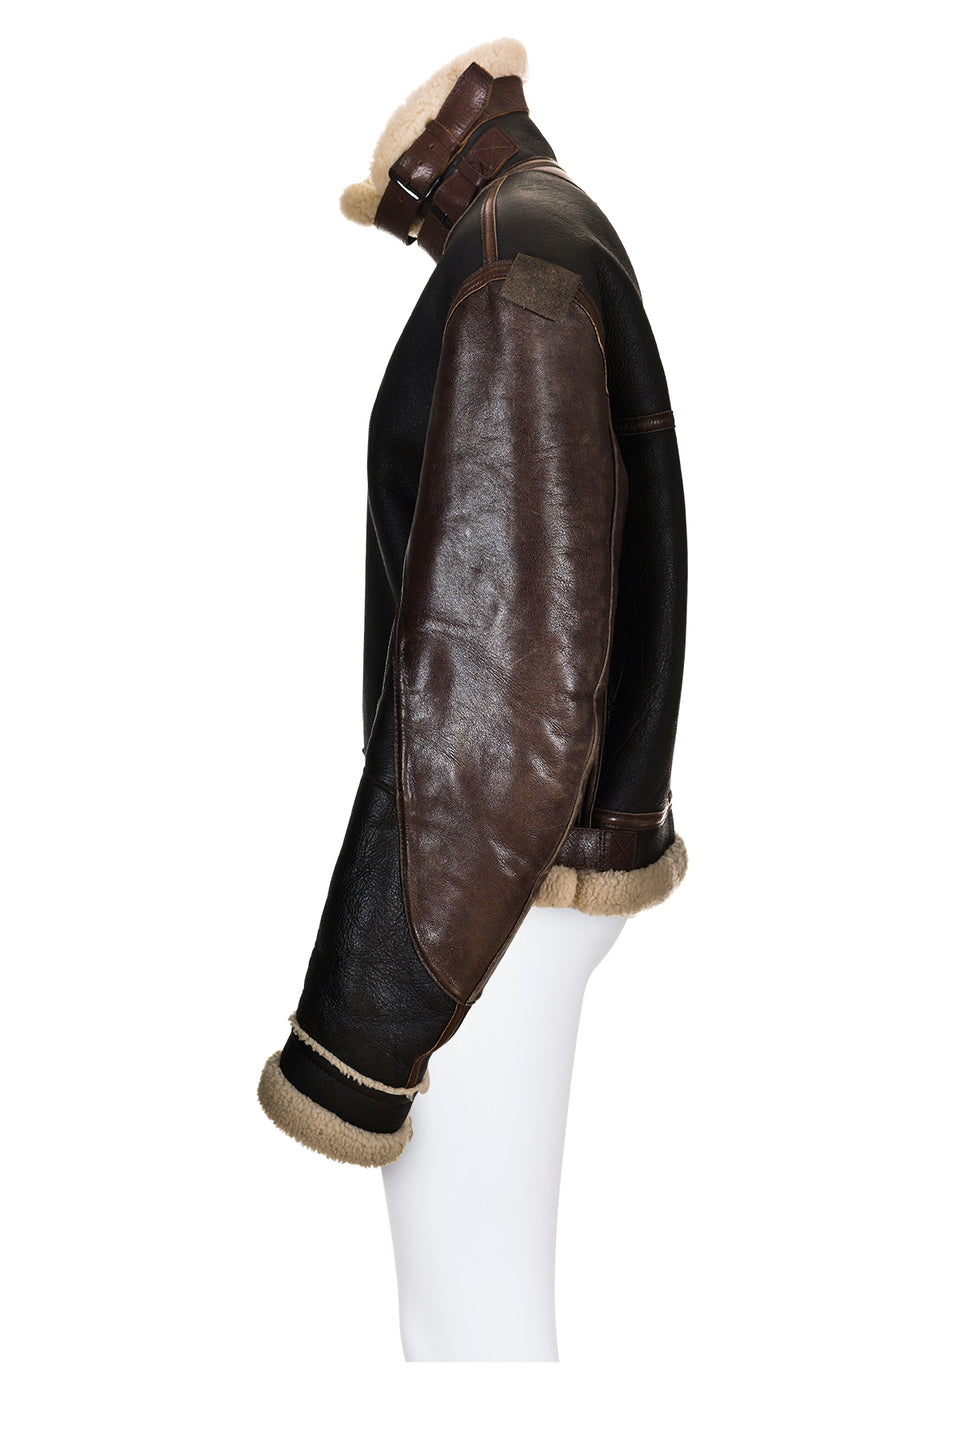 Balenciaga Denim jacket - b3 store